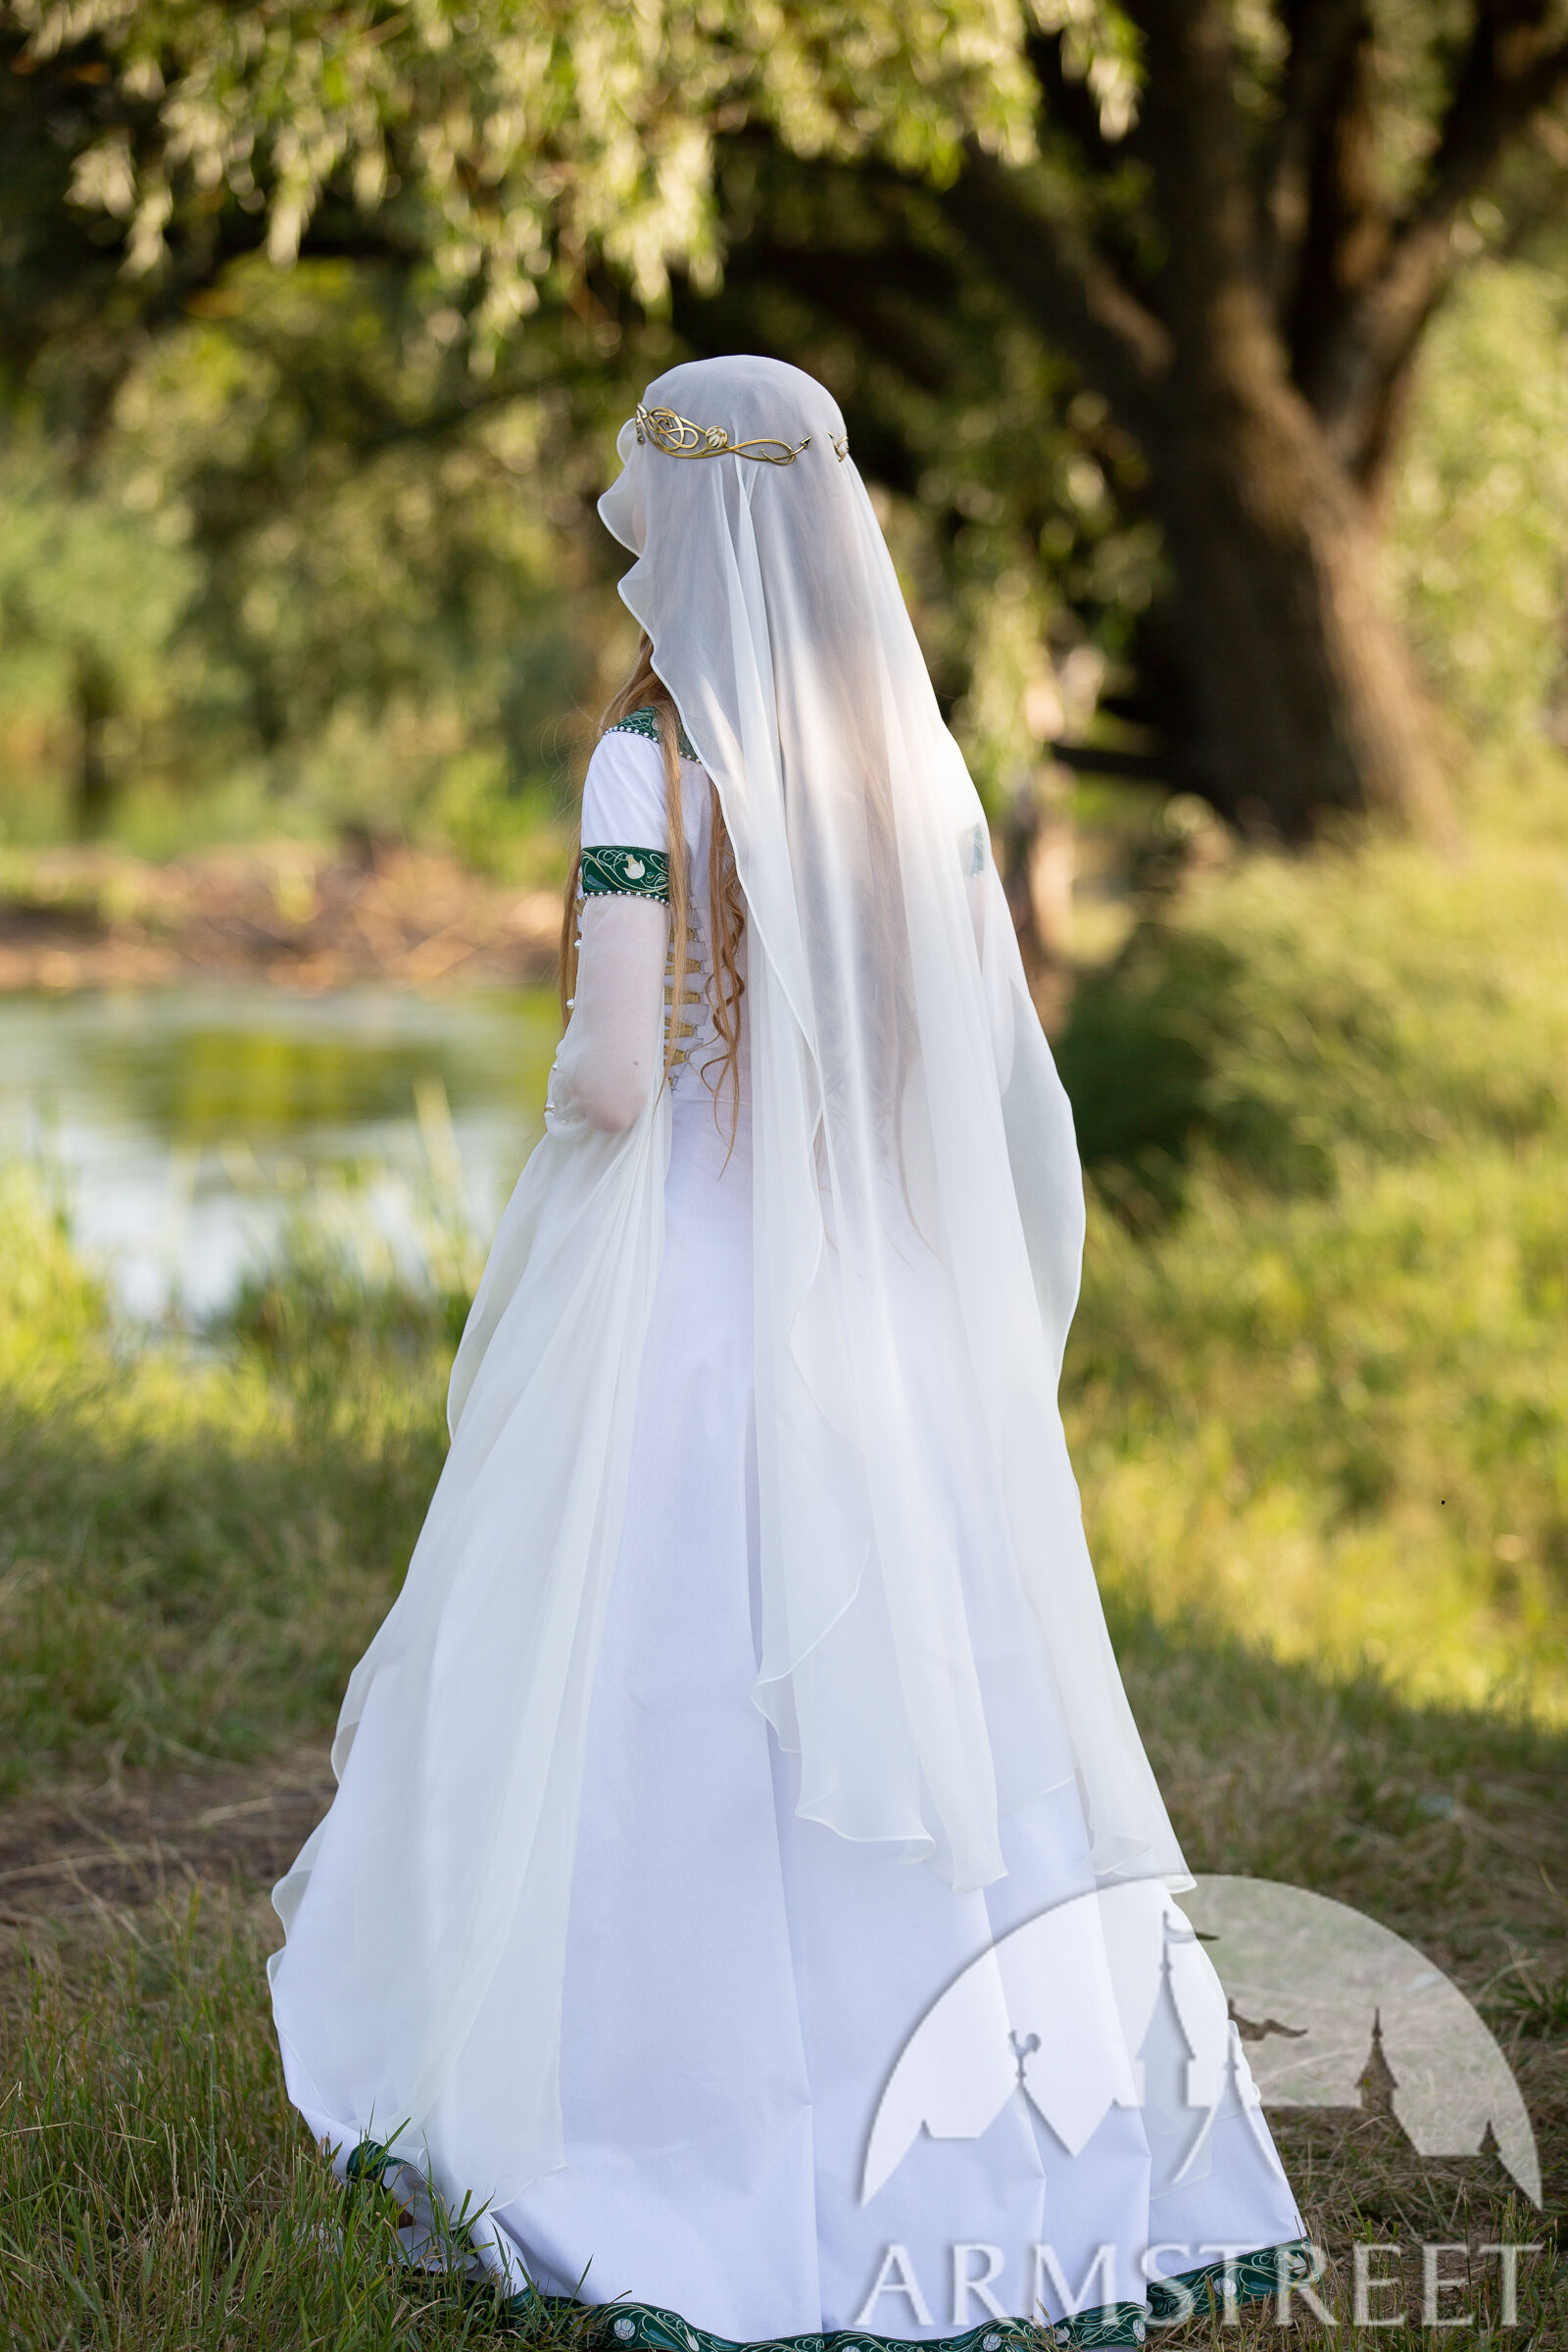 Mittelalter Renaissance Gewand Brautkleid Robe Kostüm Eloise Ecru-Weiss XS-60